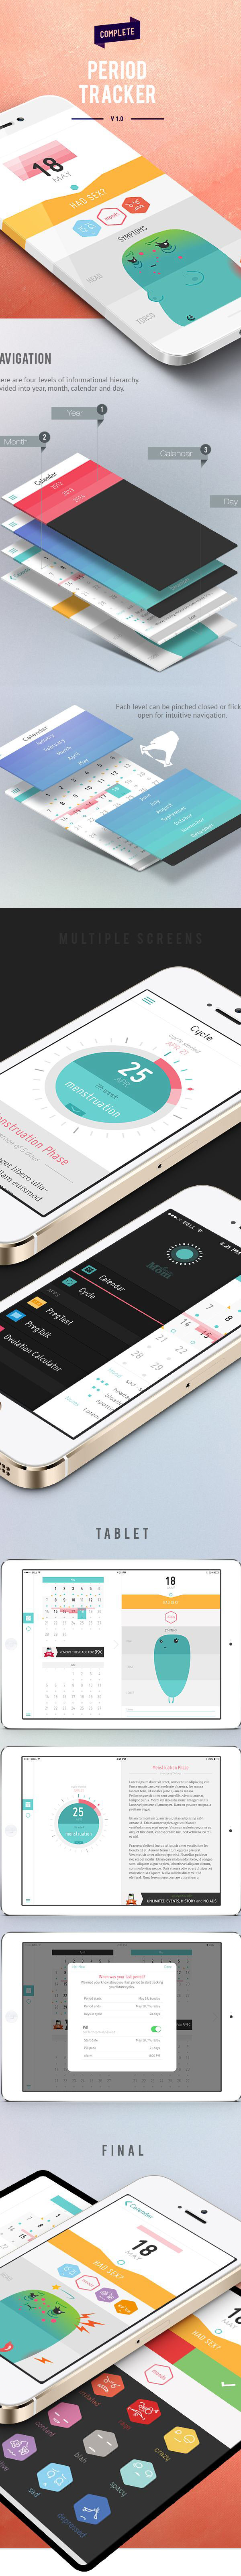 Period Tracker app on iOS